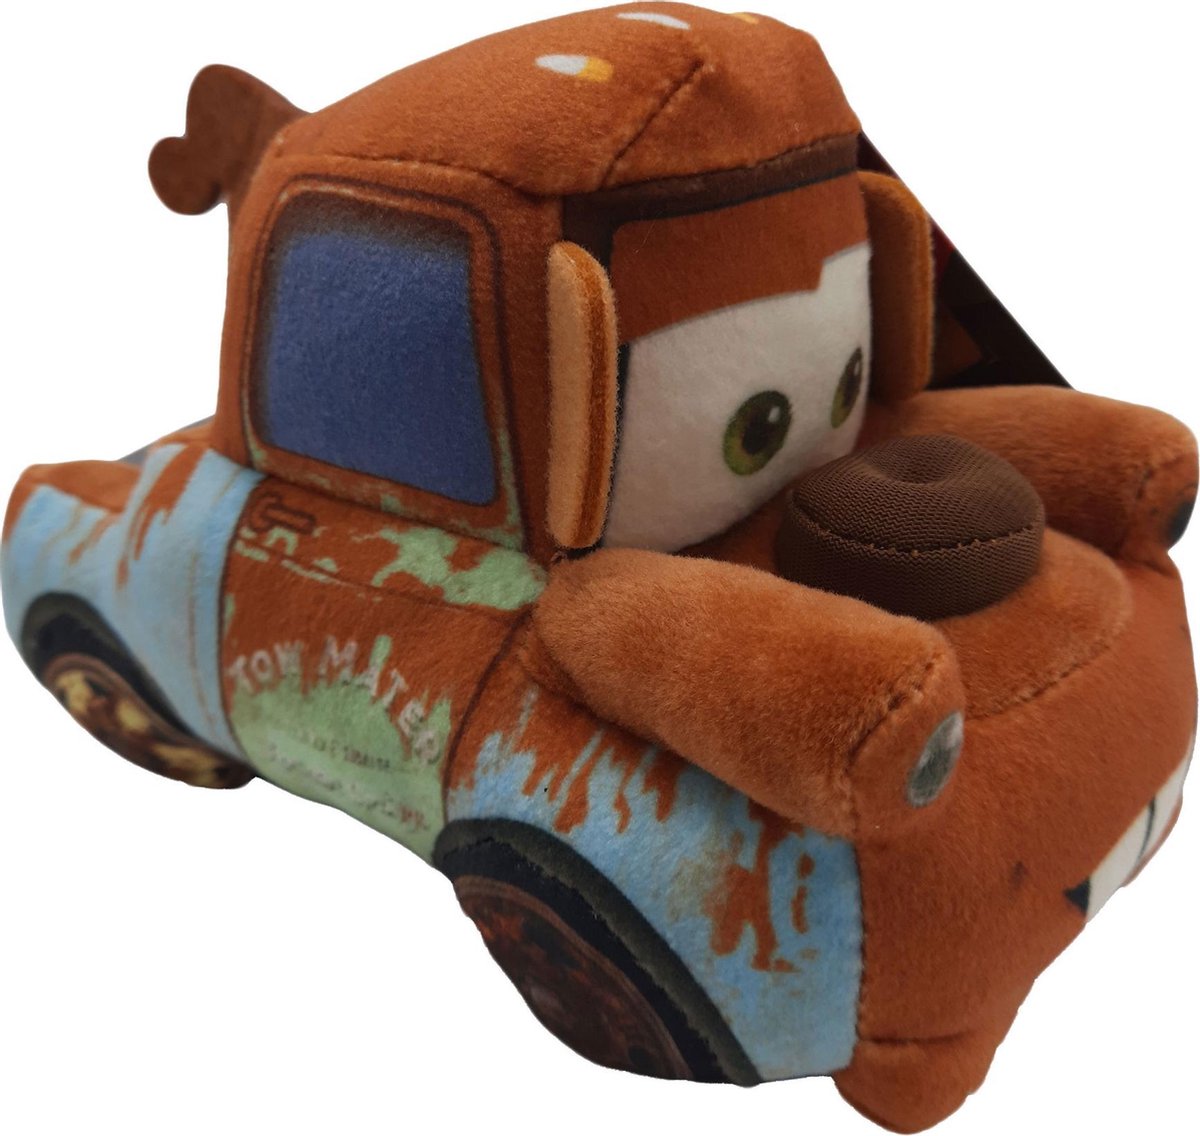 Mater - Voiture en peluche en peluche - Disney Cars 3 (16 cm)